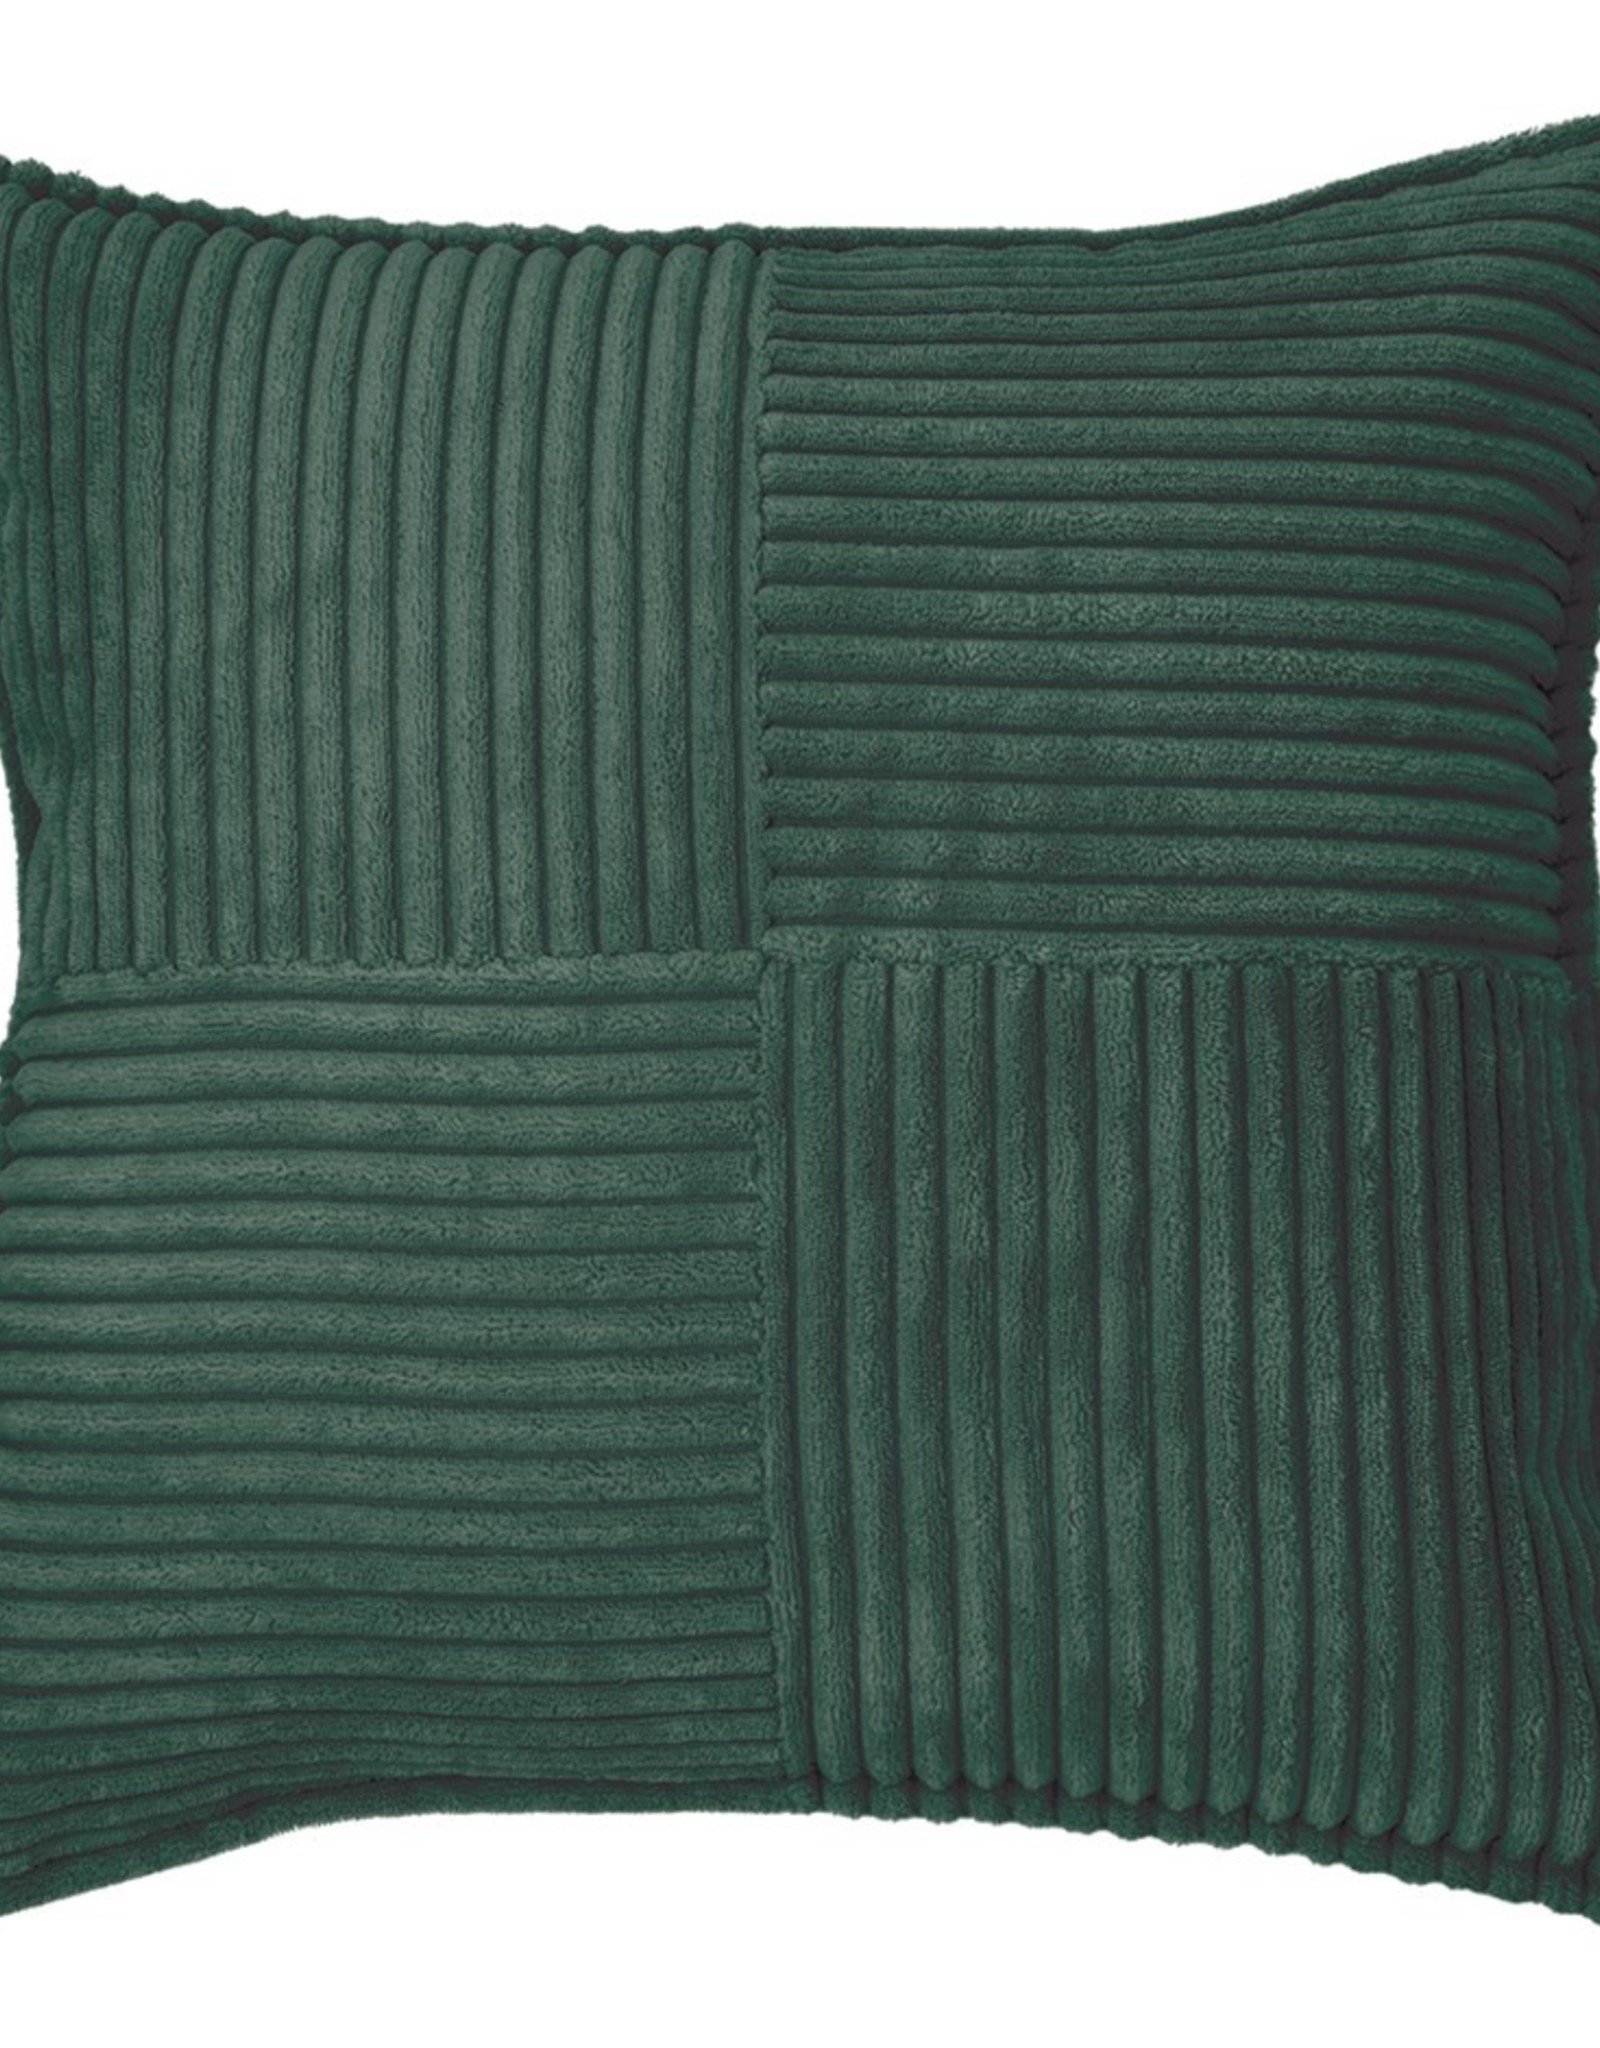 Cushions Brunelli Moumou Green Corduroy Velvet European Pillow  165GN125